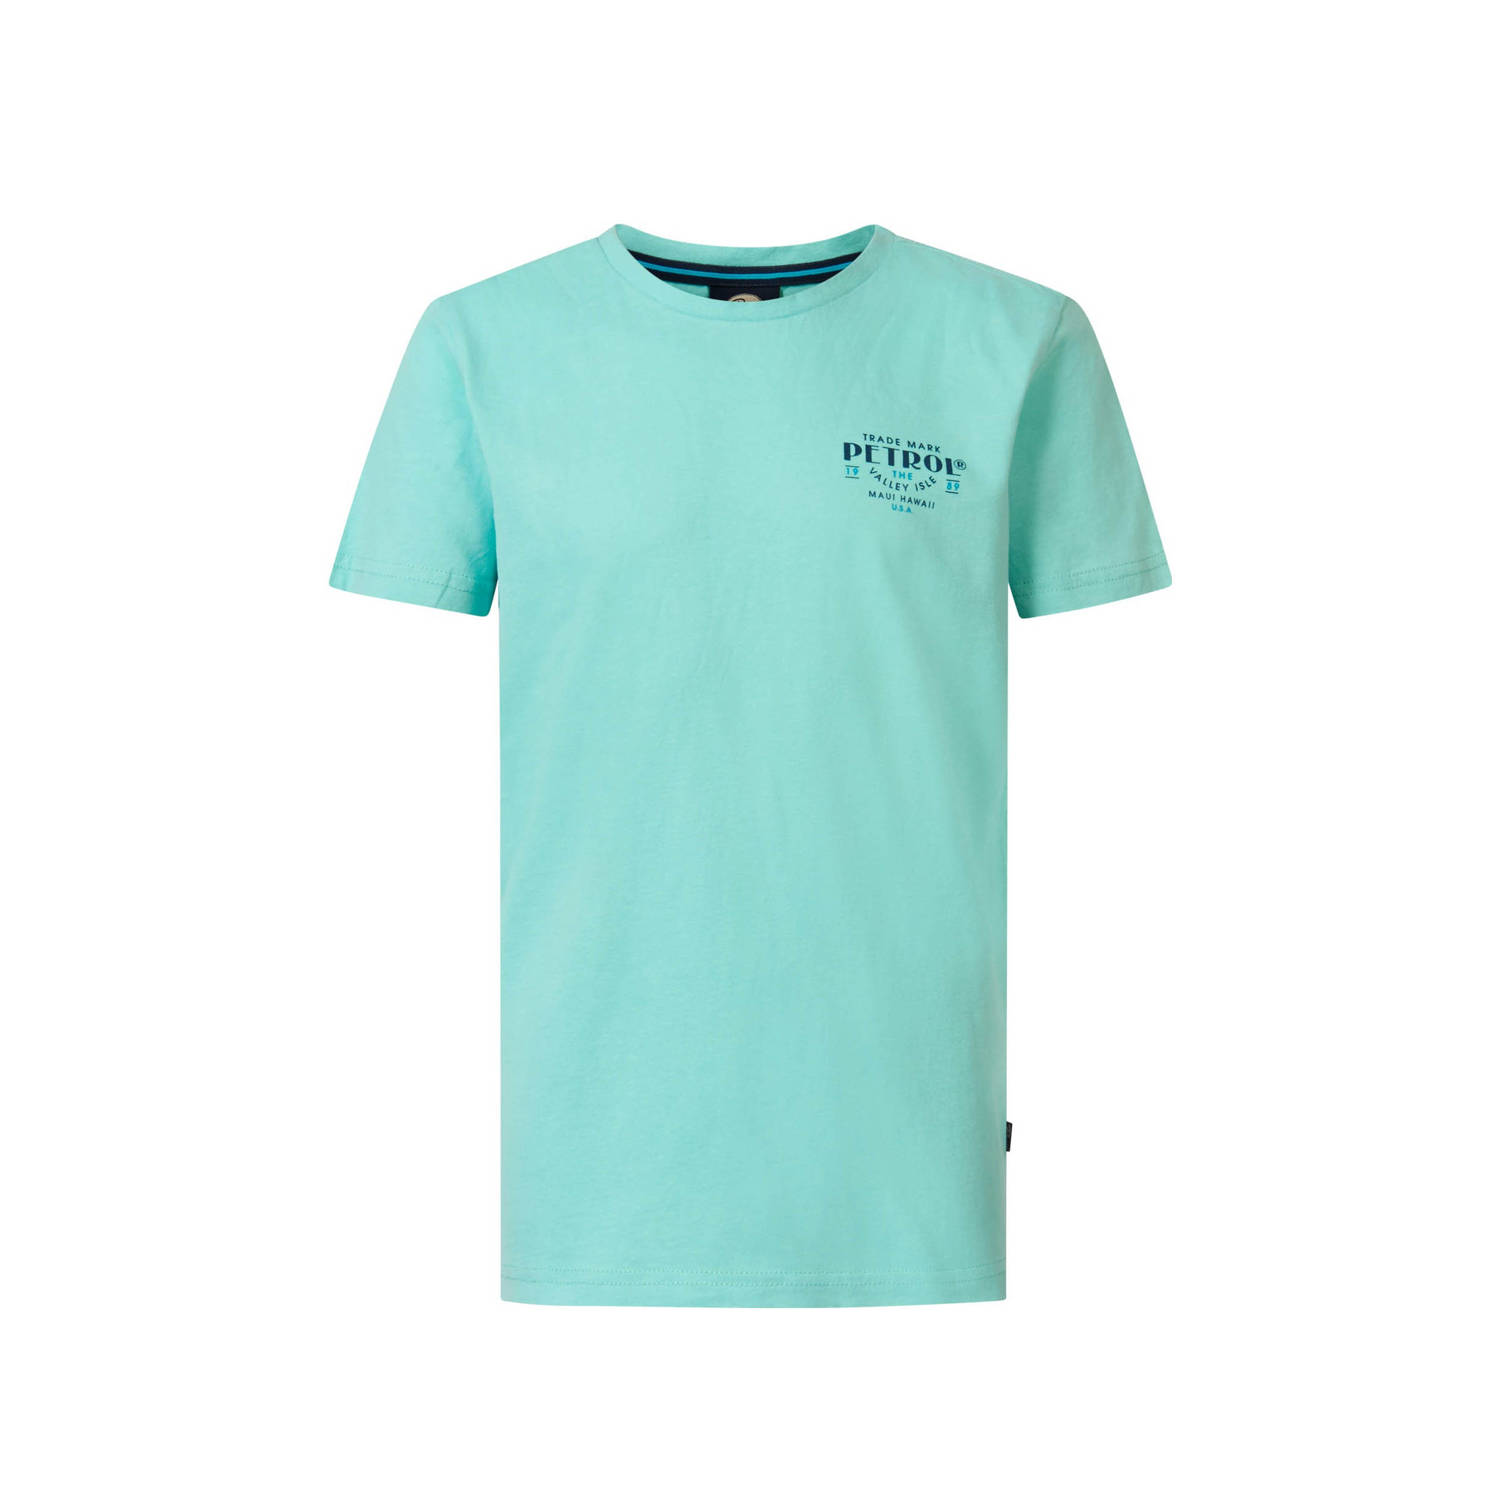 Petrol Industries T-shirt aqua blauw Jongens Katoen Ronde hals Effen 116